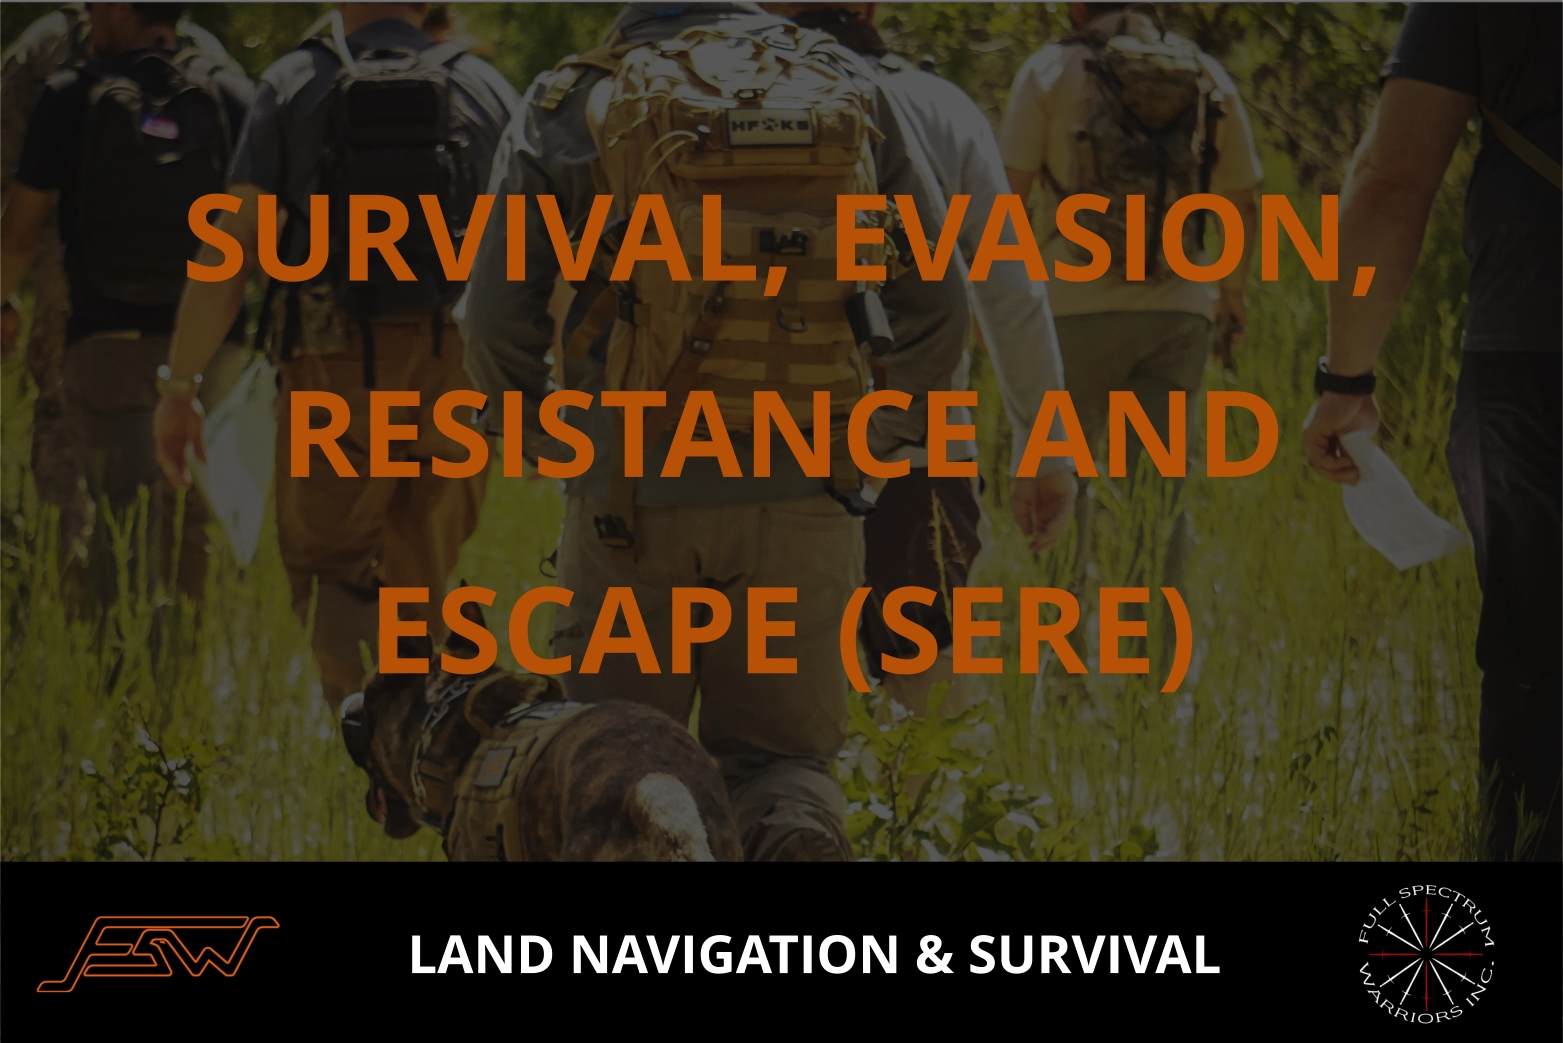 SURVIVAL, EVASION, RESISTANCE AND ESCAPE (SERE)